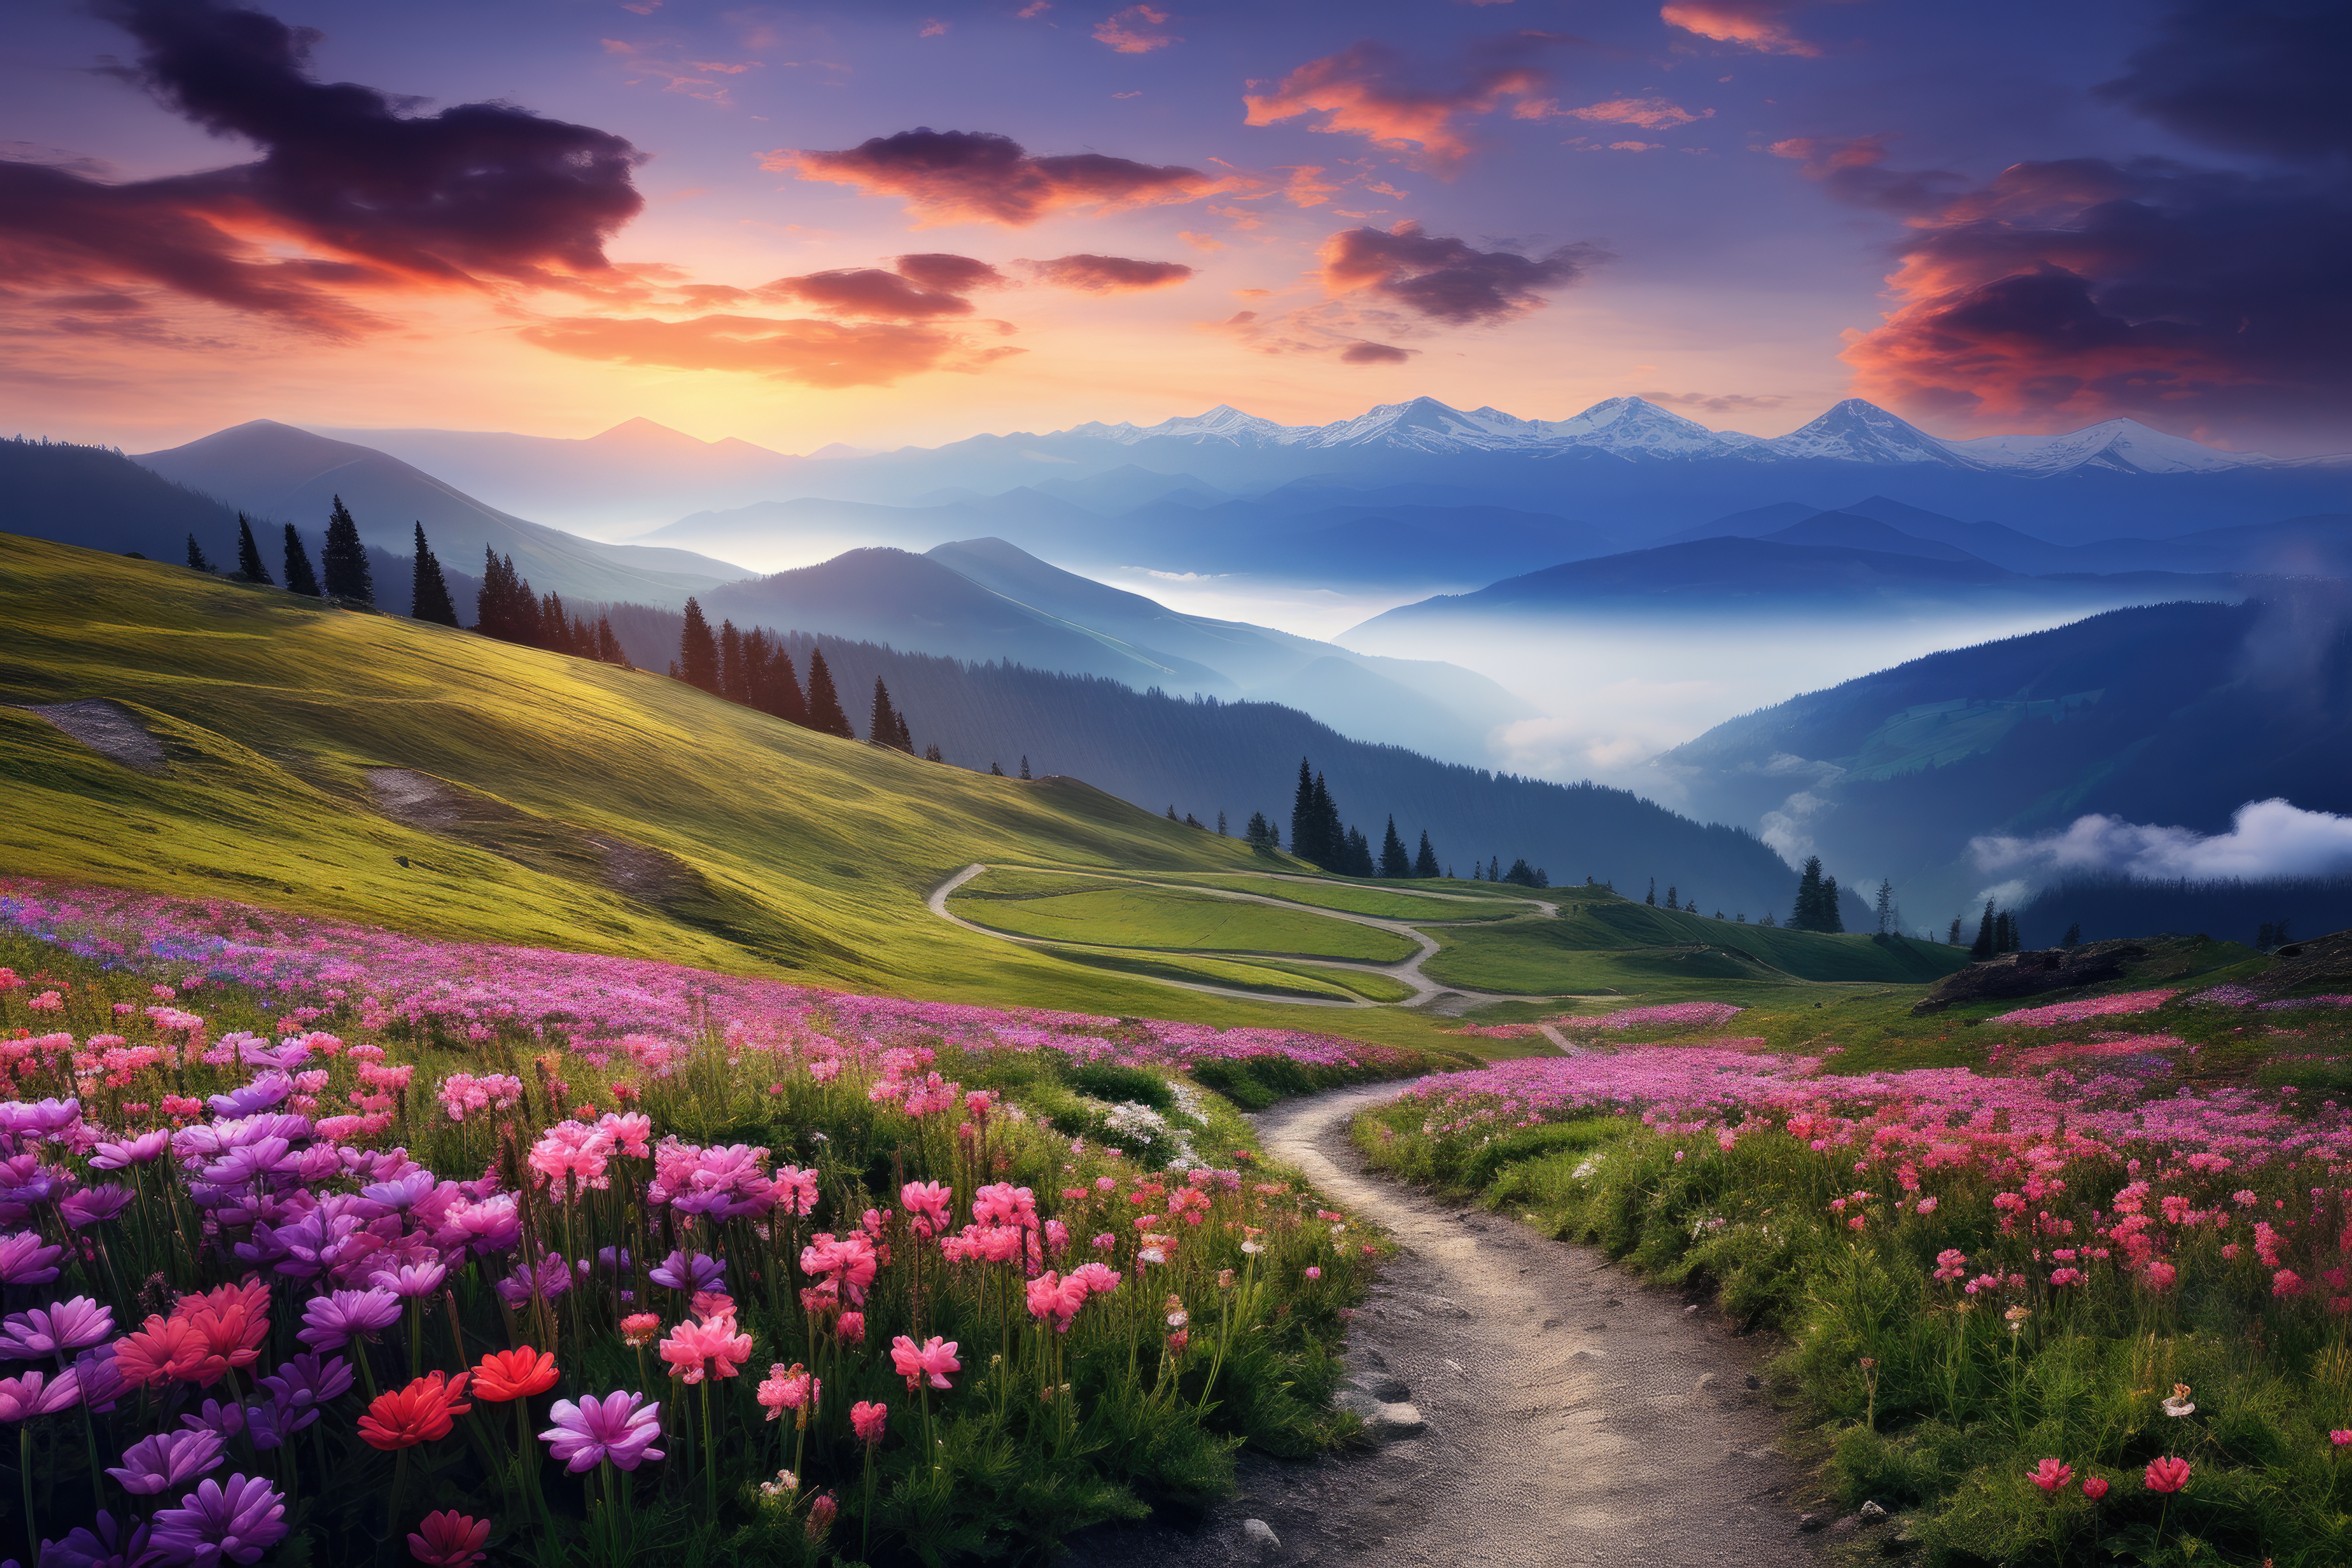 Beautiful Nature Mountain Scenery with Flowers Free Stock Photo